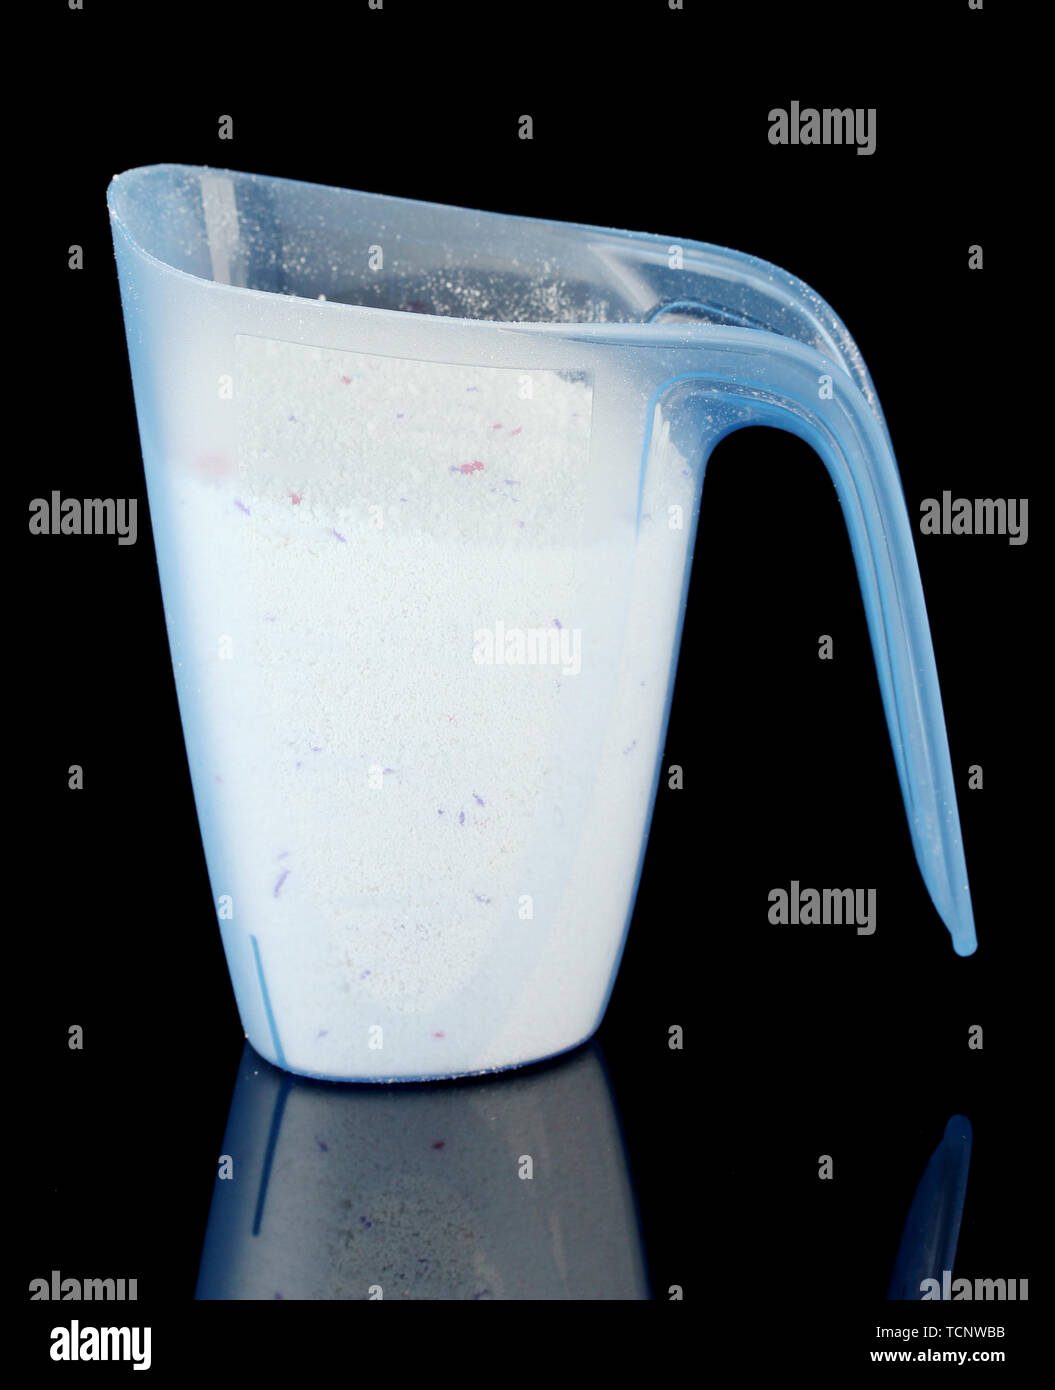 https://c8.alamy.com/comp/TCNWBB/washing-powder-in-a-measuring-cup-isolated-on-black-TCNWBB.jpg